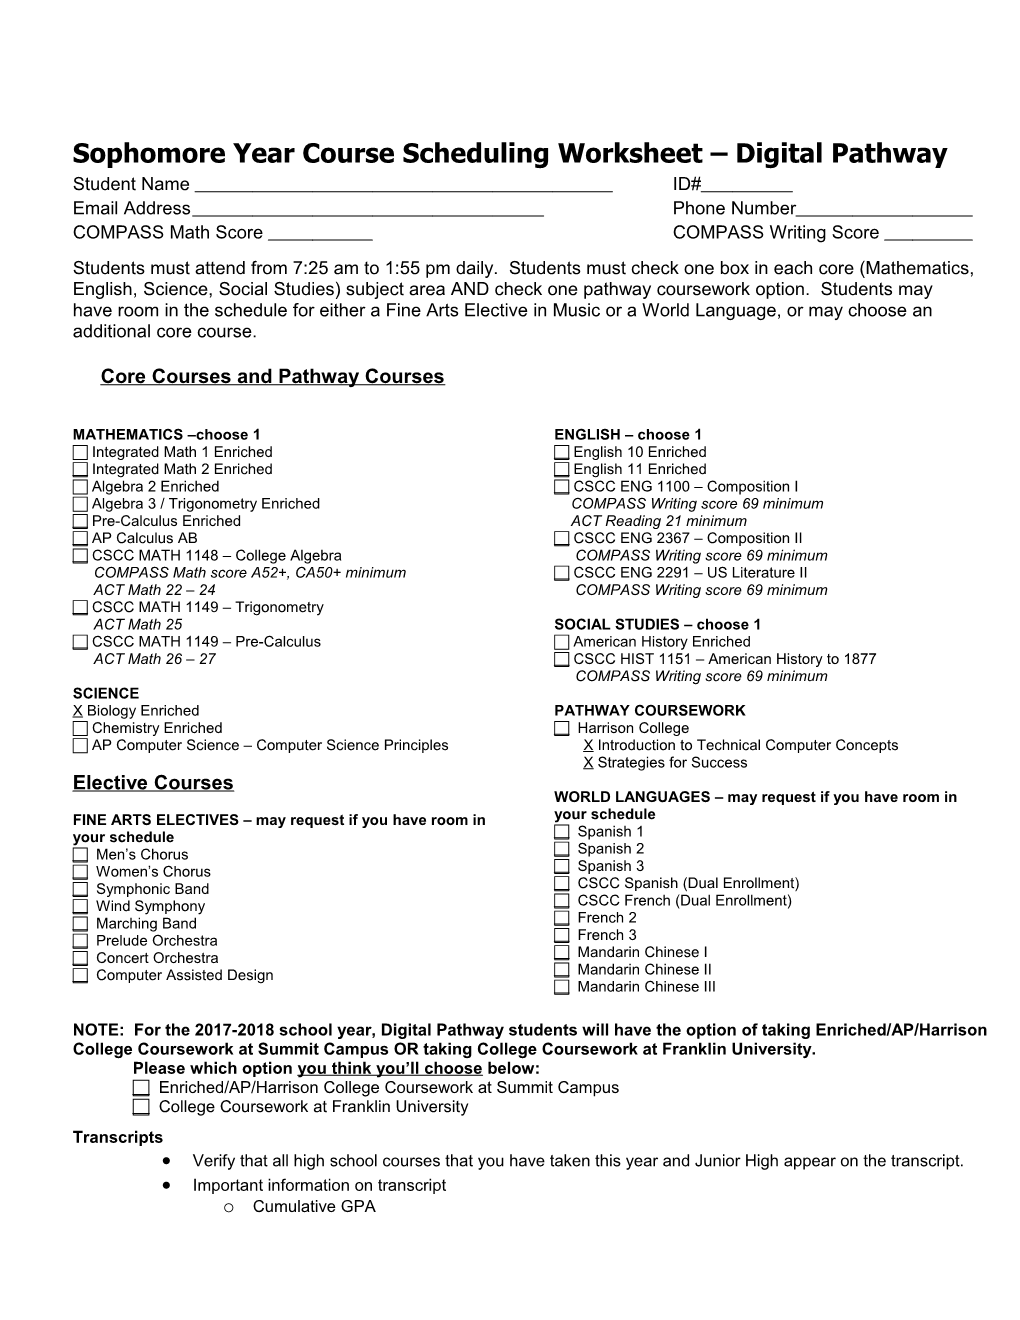 Sophomore Year Course Scheduling Worksheet Digital Pathway